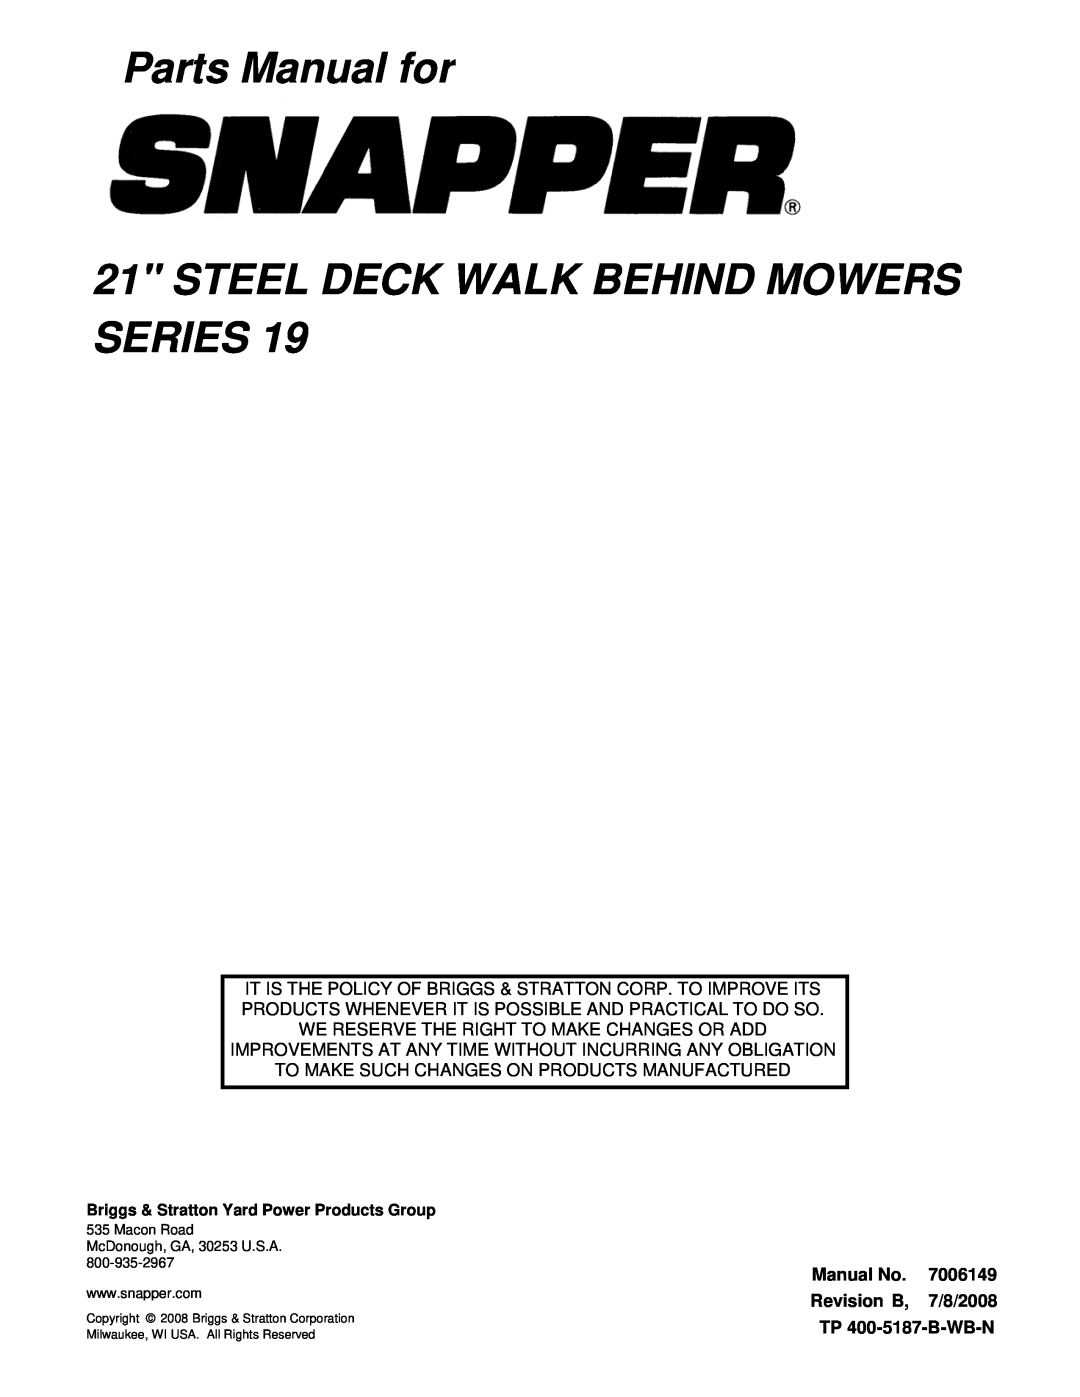 Snapper SERIES 19 manual Steel Deck Walk Behind Mowers Series, Parts Manual for, Manual No, 7006149, Revision B, 7/8/2008 